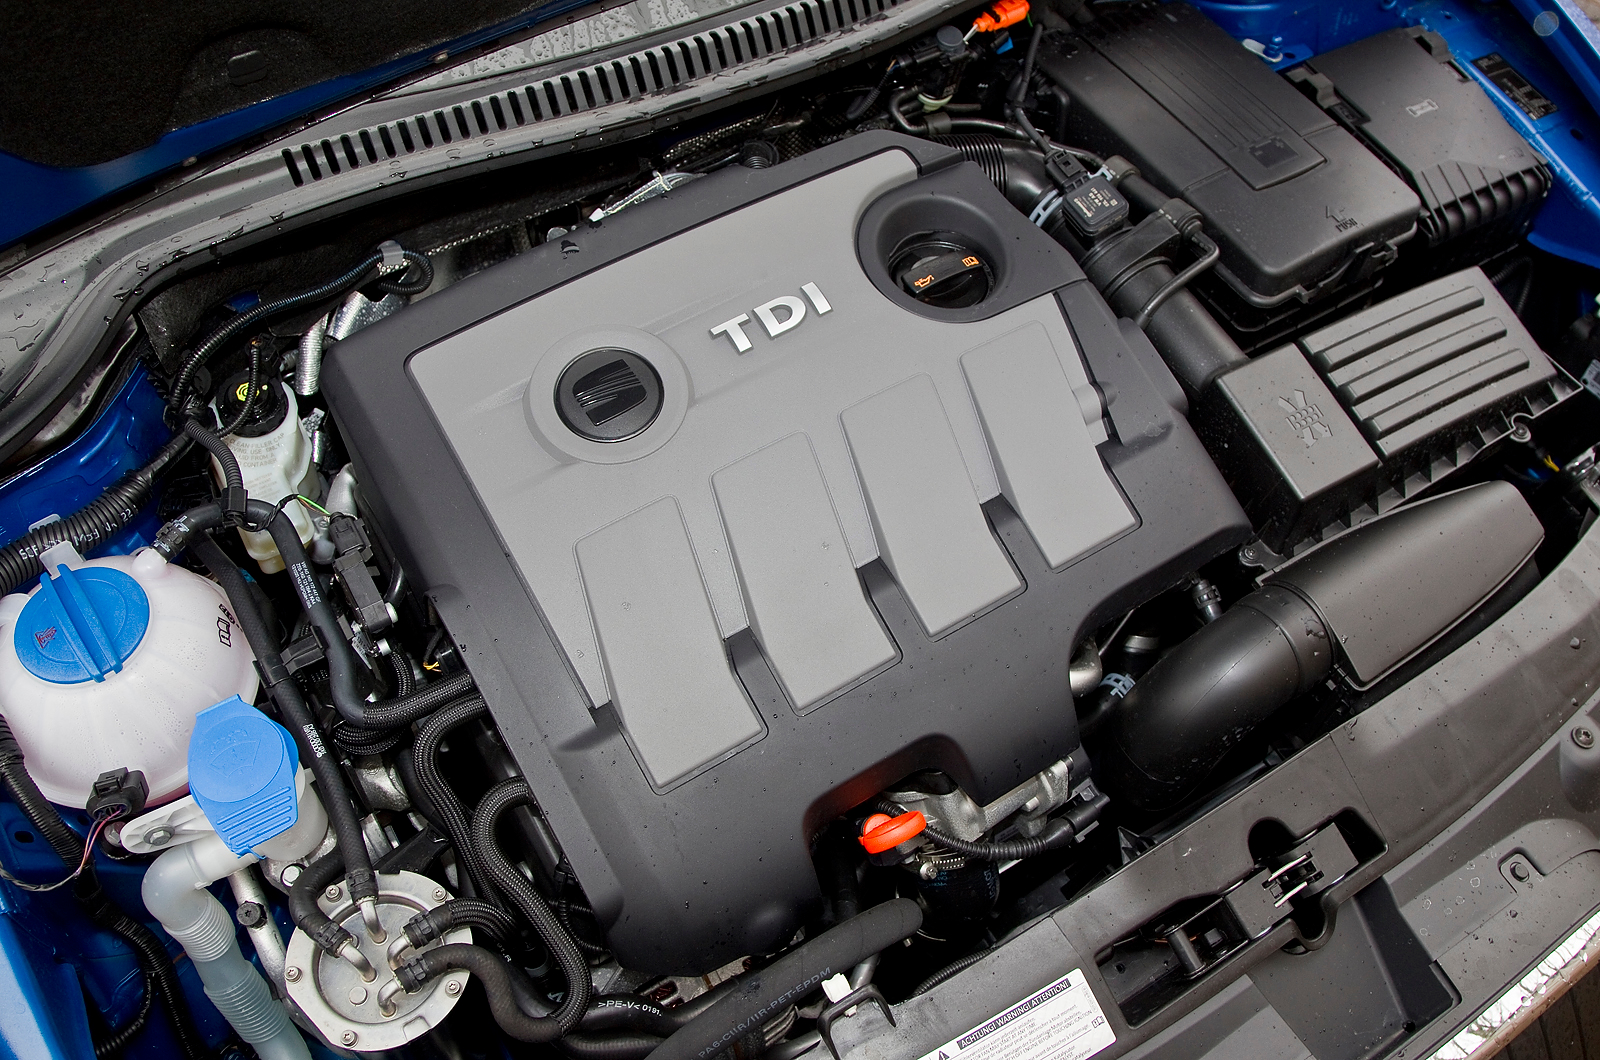 1.2-litre TSI Seat Leon engine